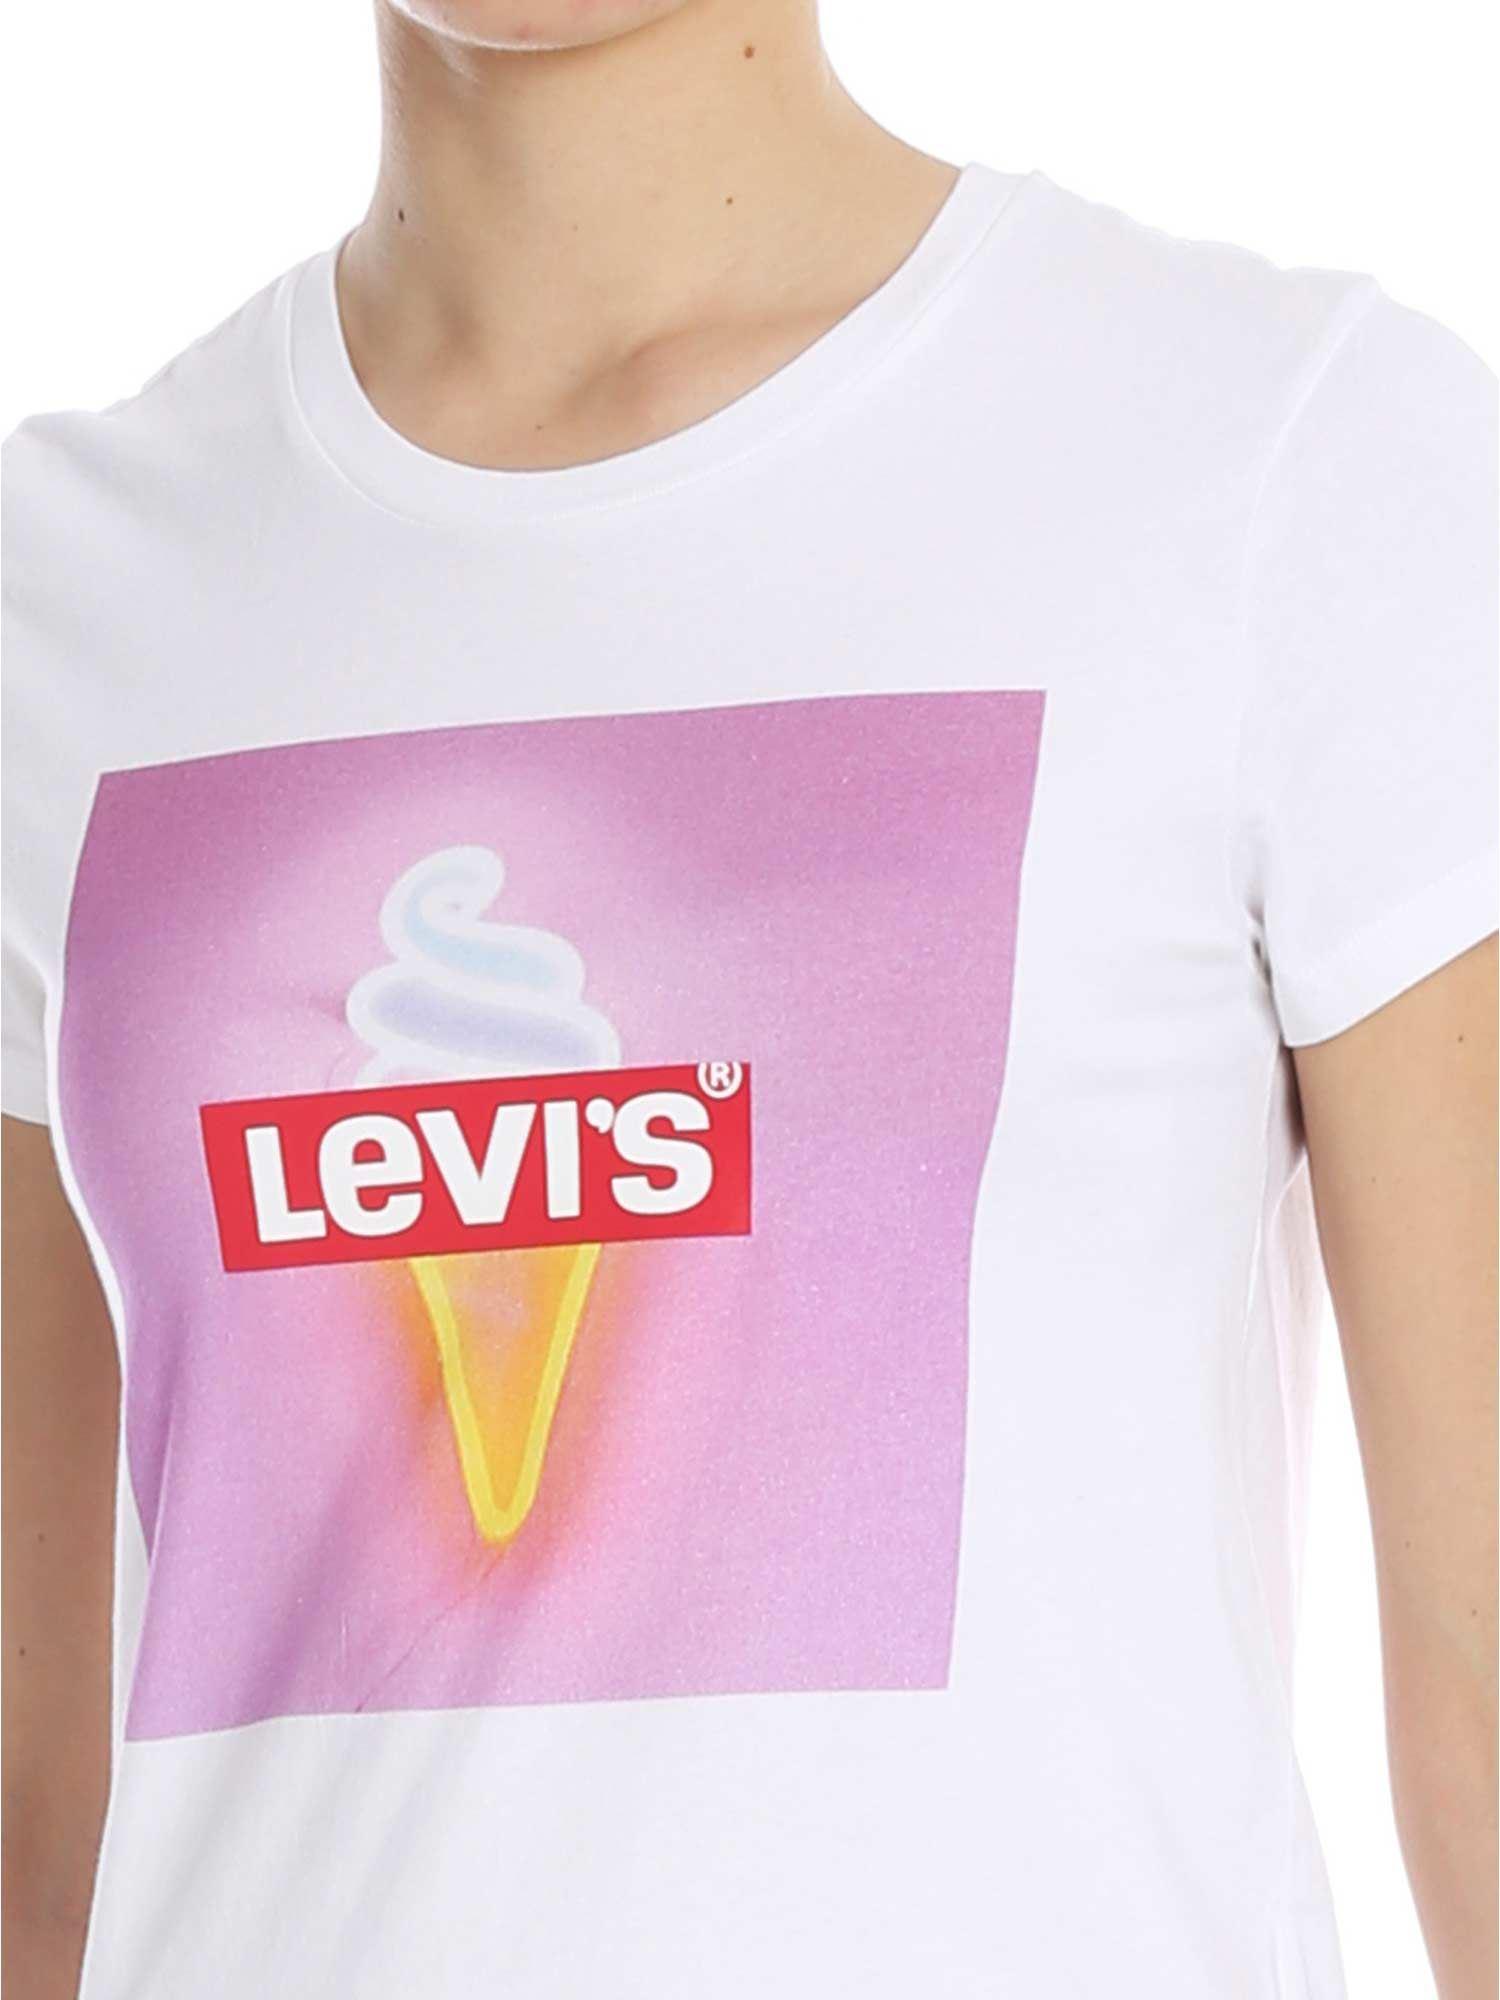 levis t shirt ice cream